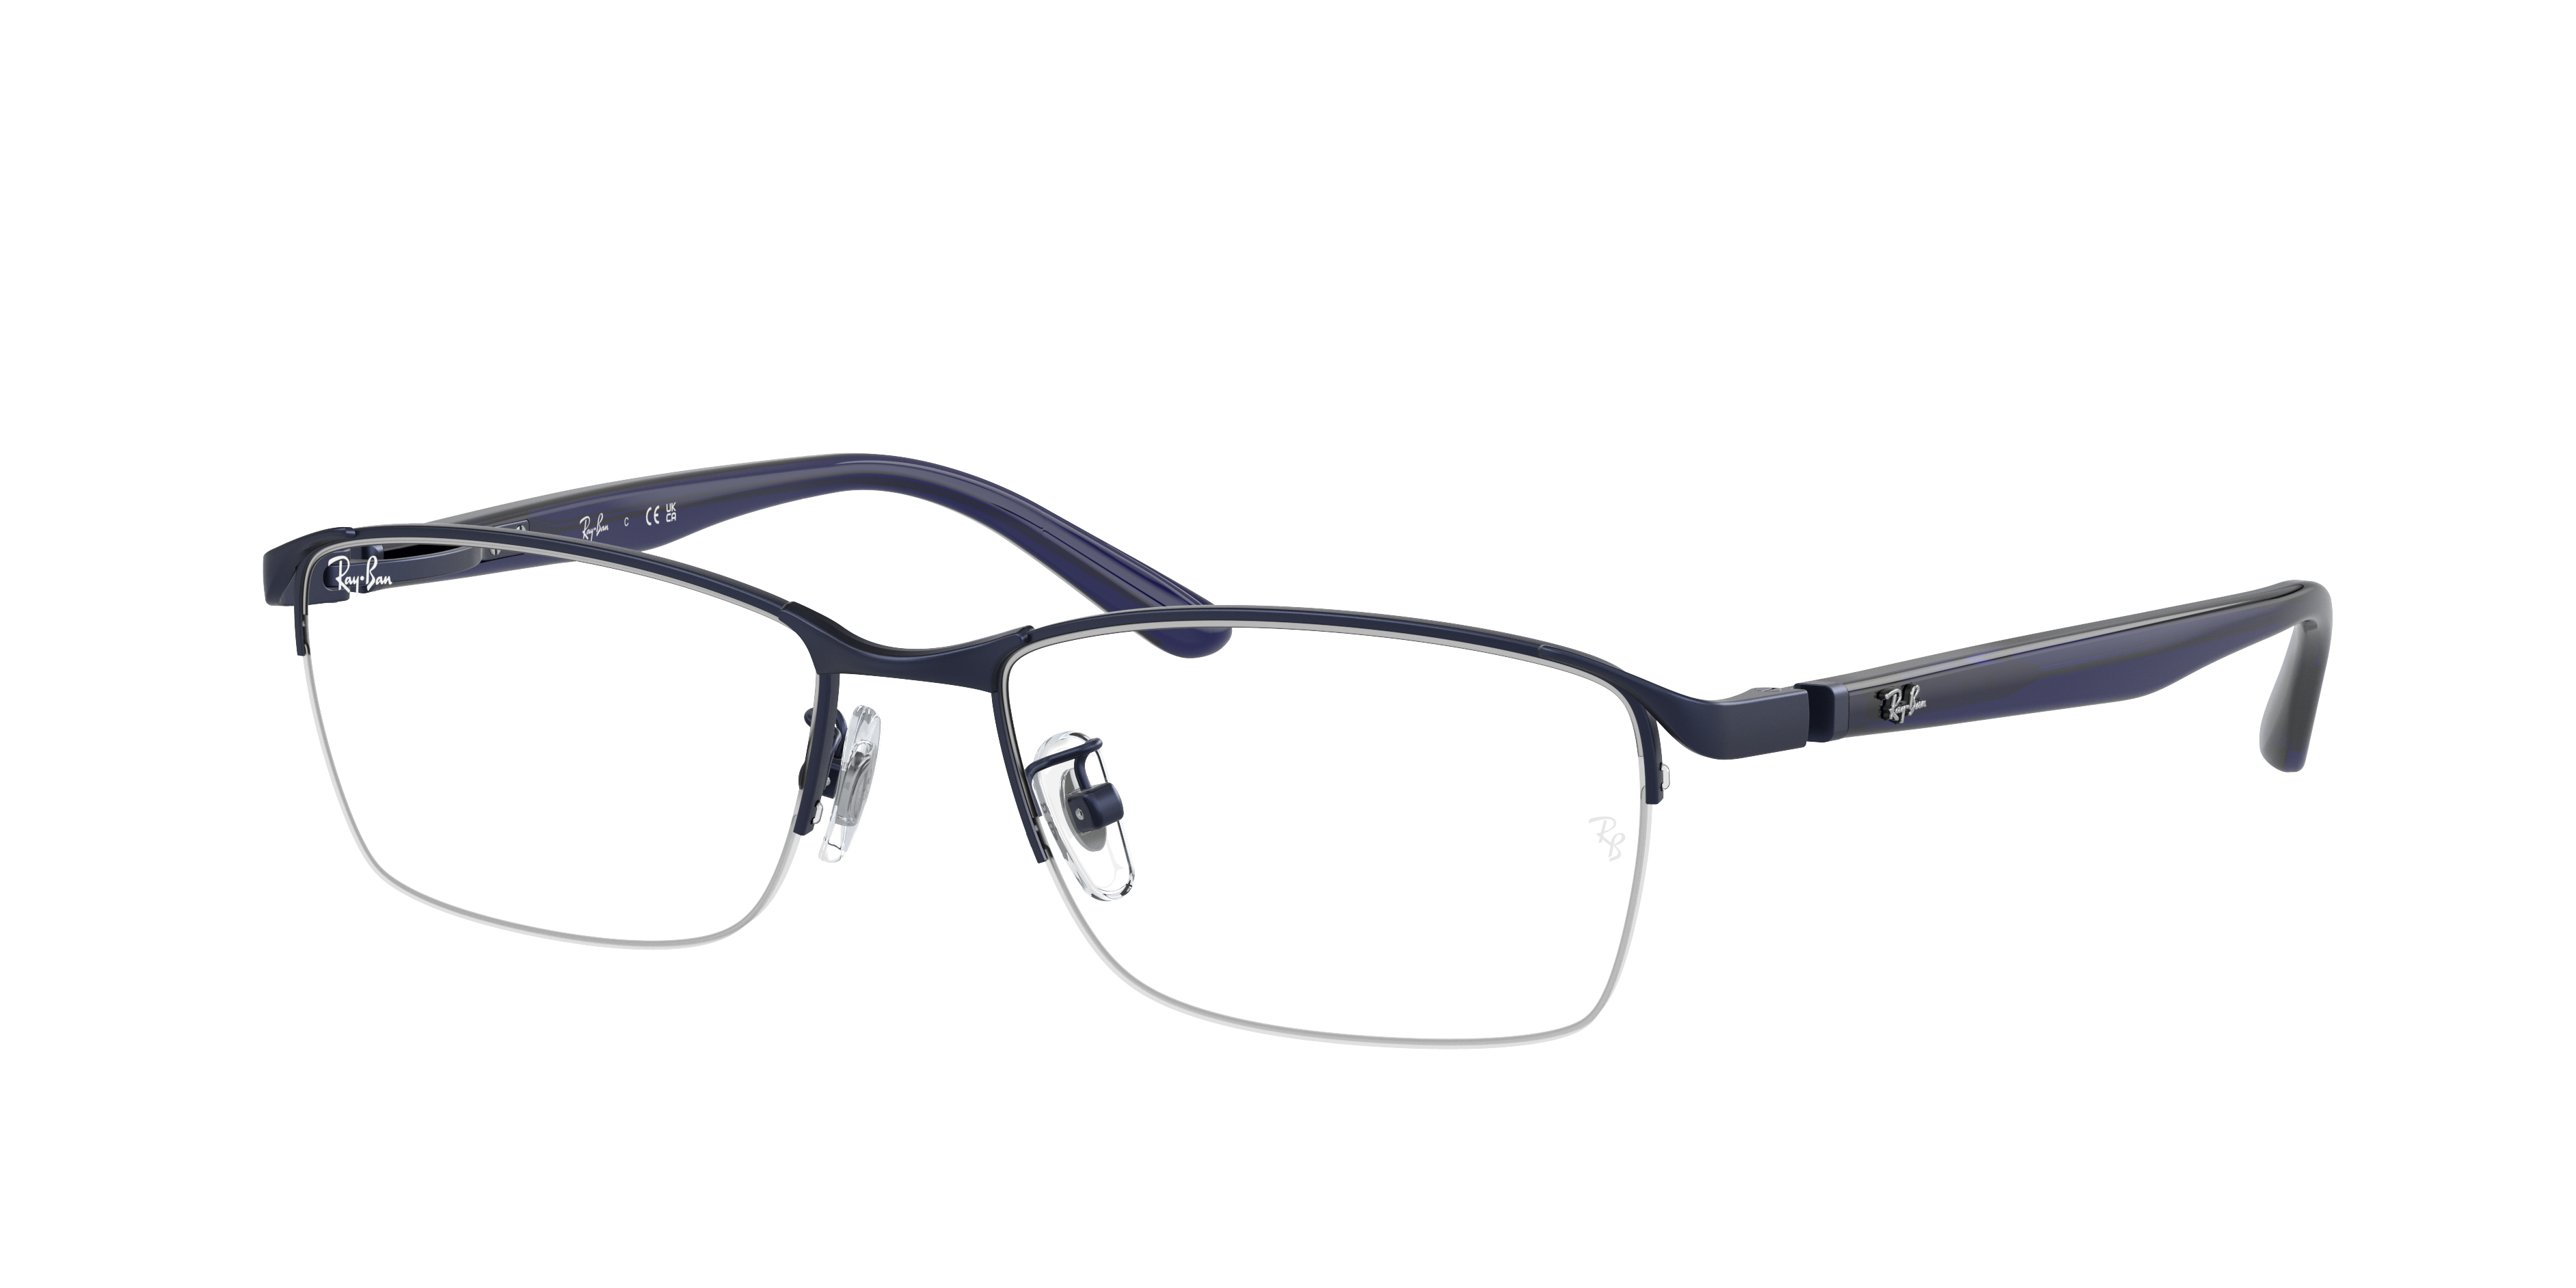 Rb6501 Optics Eyeglasses with Blue Frame - RB6501D | Ray-Ban®